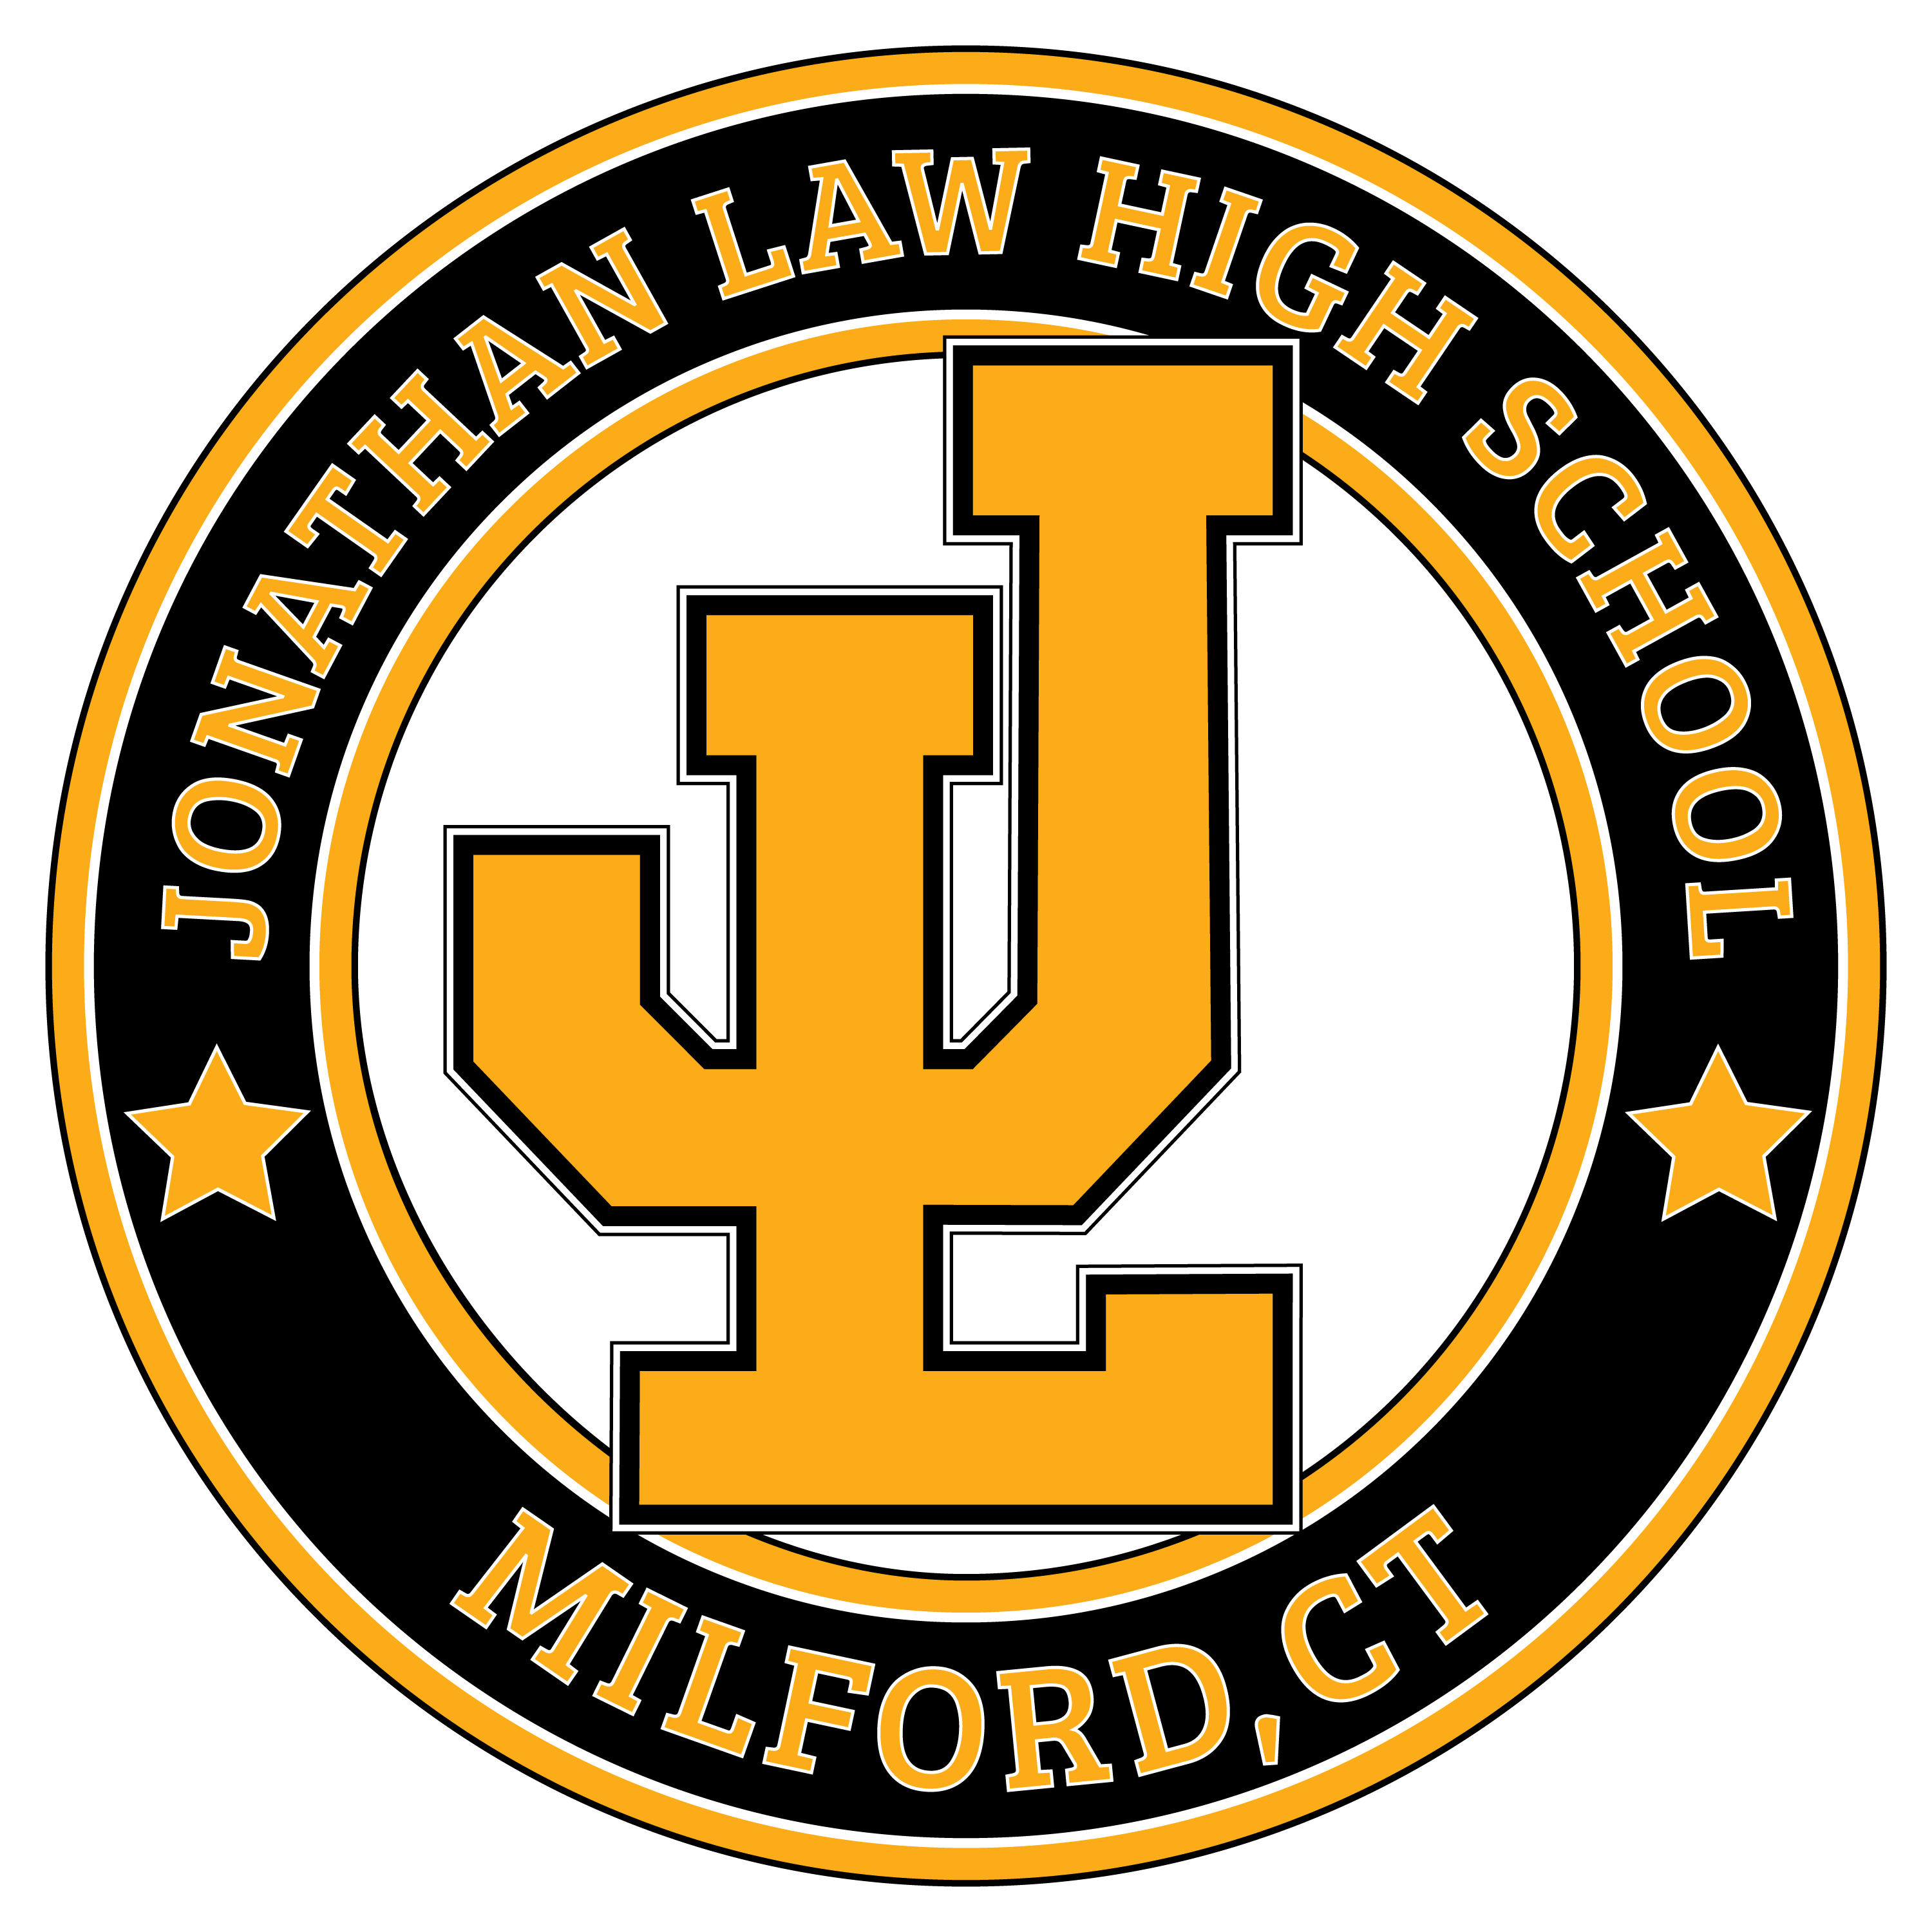 Jonathan Law High School